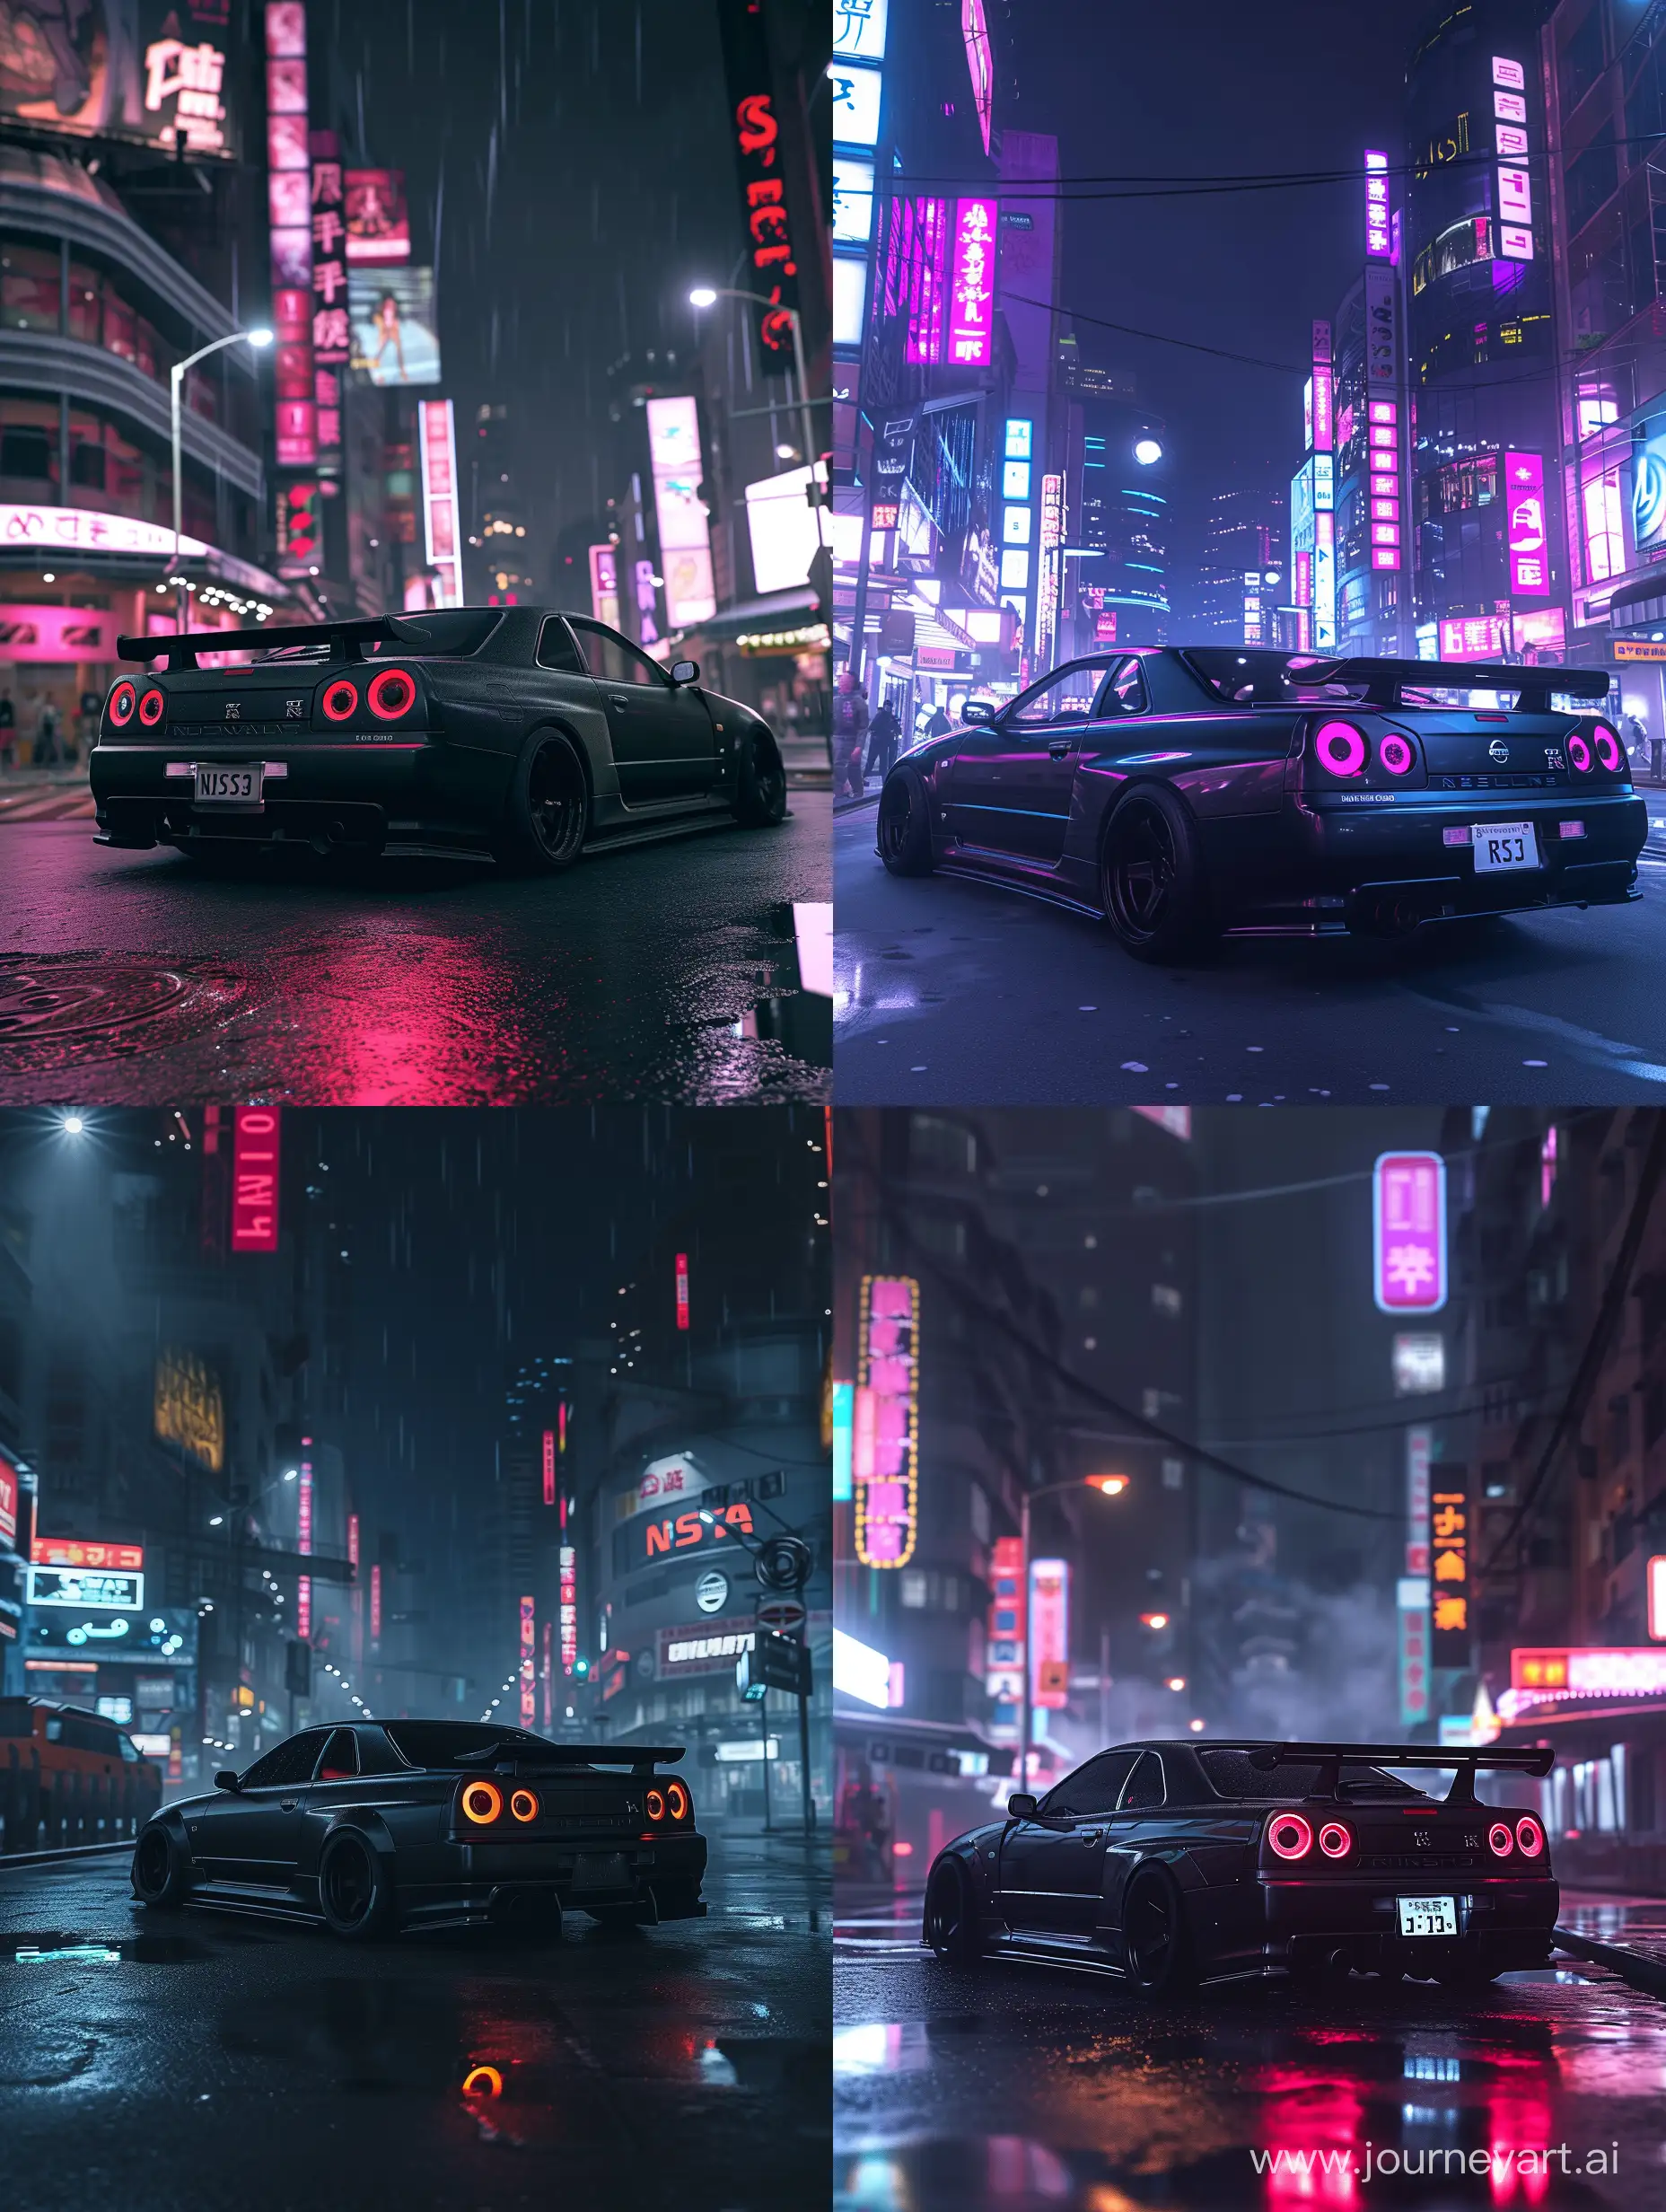 Futuristic-Cyberpunk-Cityscape-with-Matte-Black-Nissan-GTR-R33-at-Night